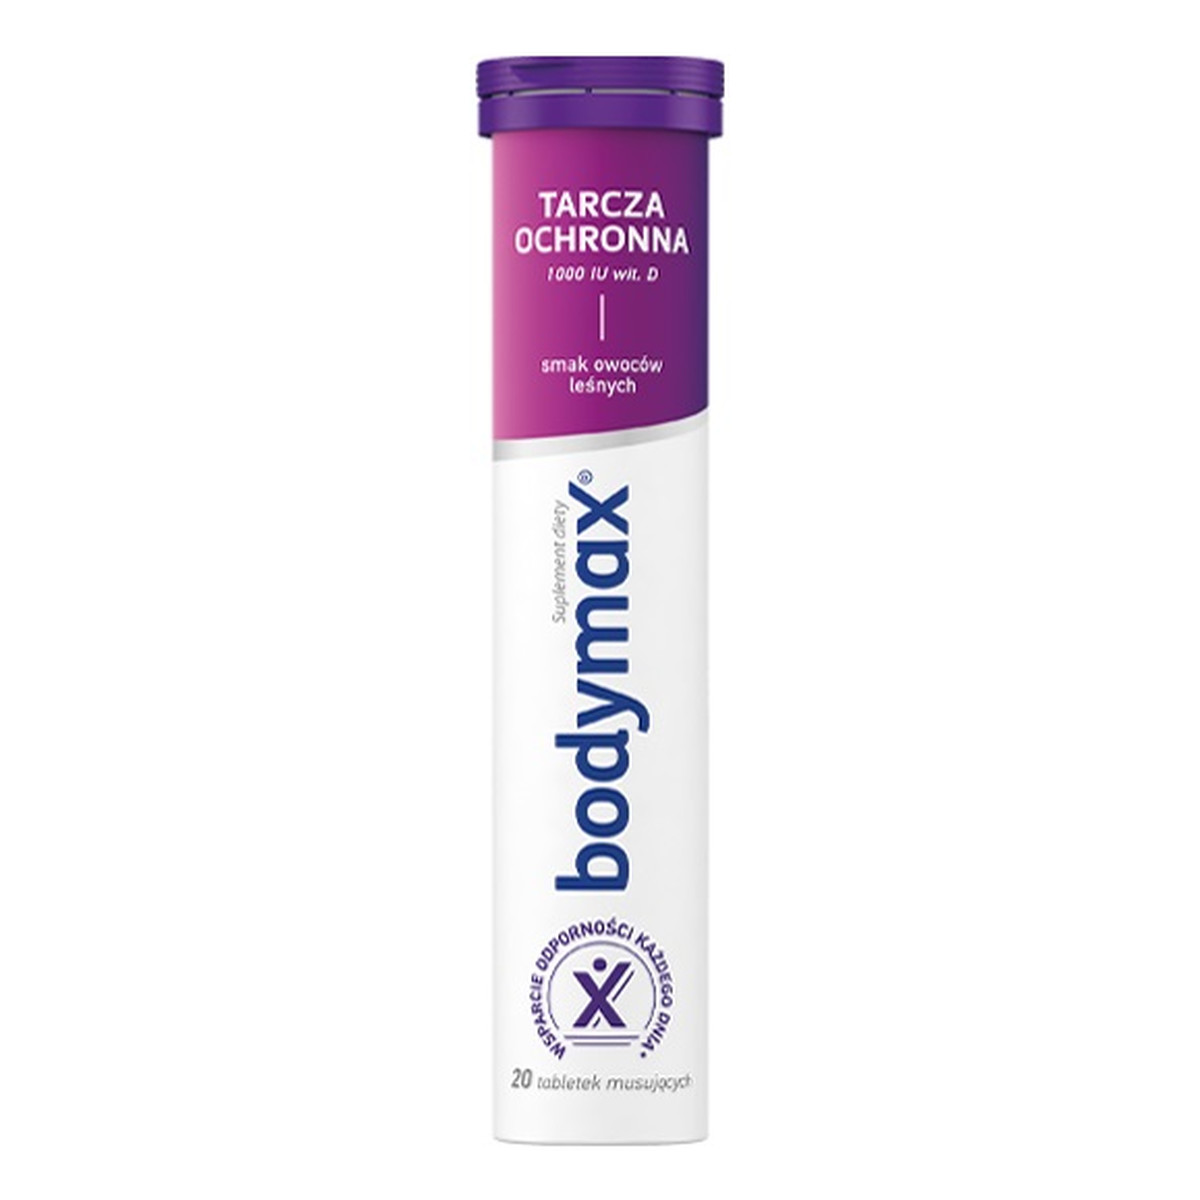 Bodymax Tarcza ochronna suplement diety 20 tabletek